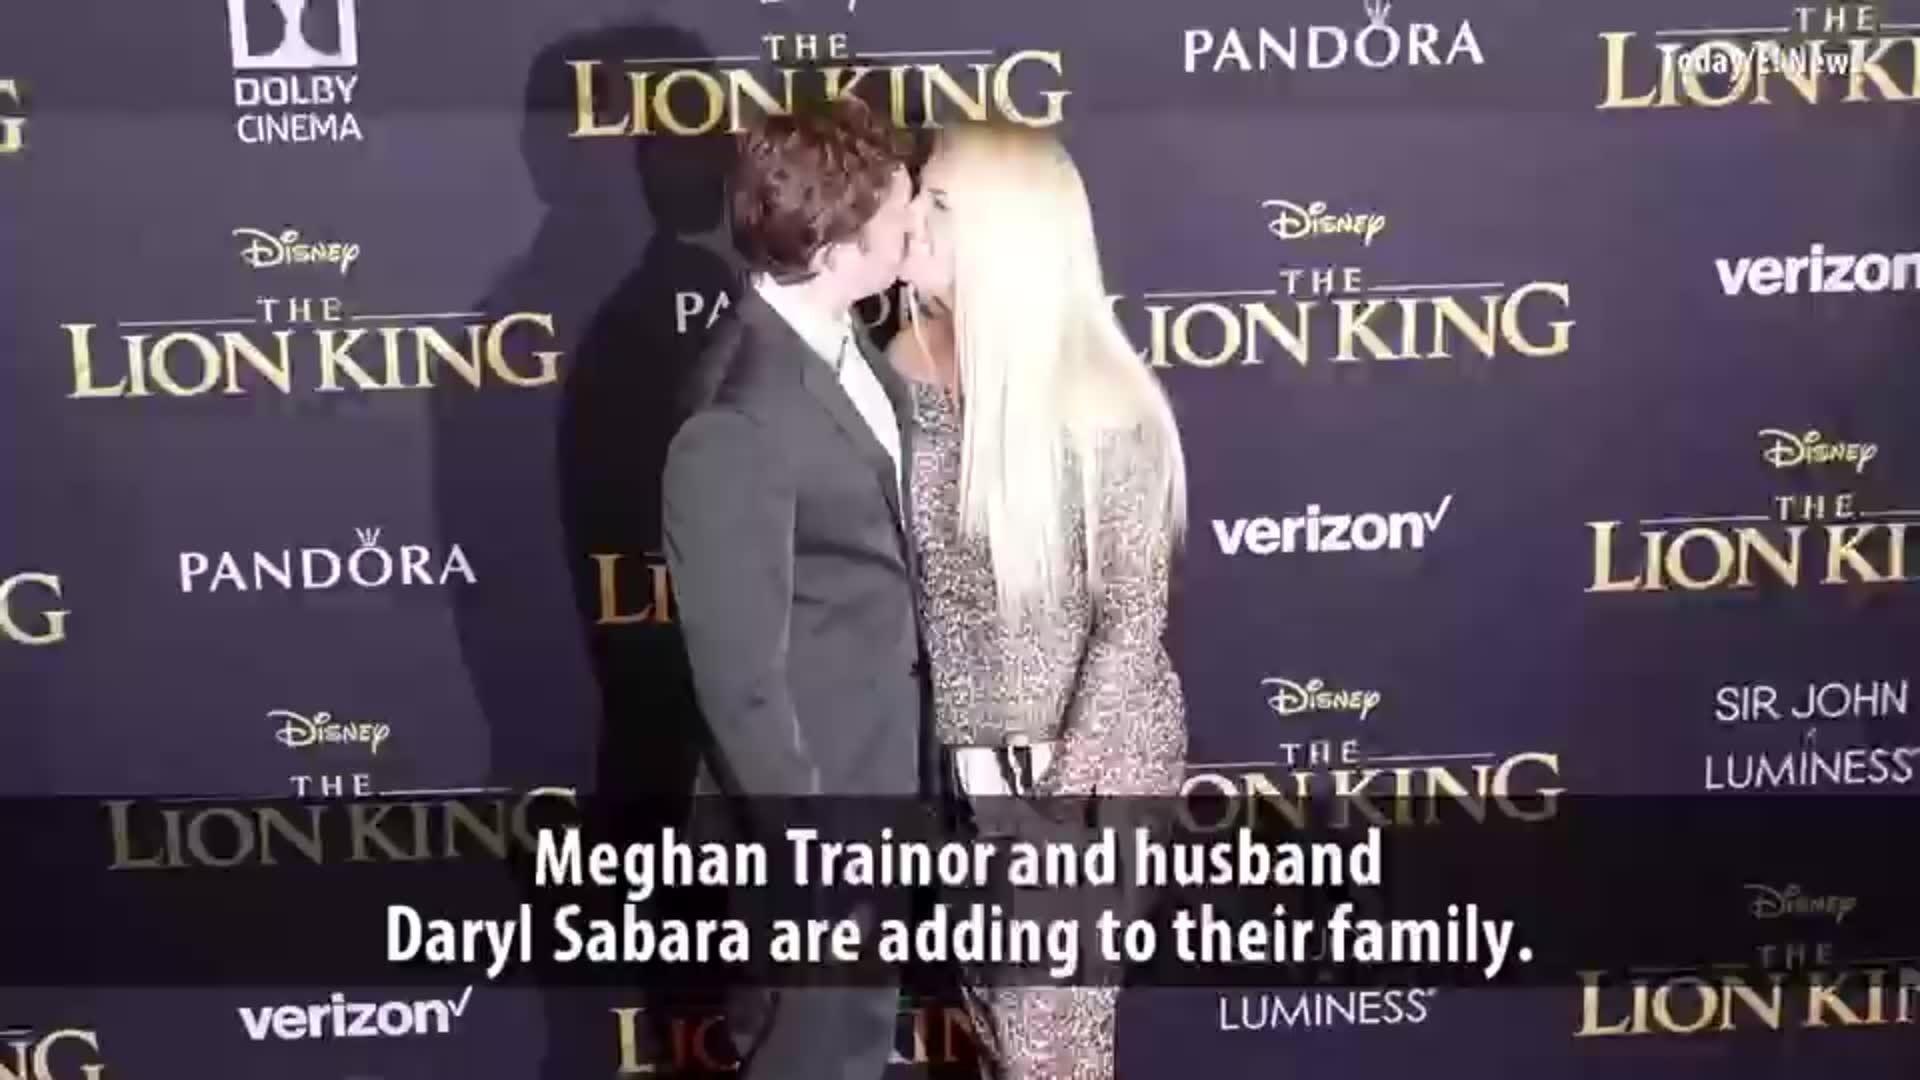 Meghan Trainor Wedding: Singer Marries Actor Daryl Sabara